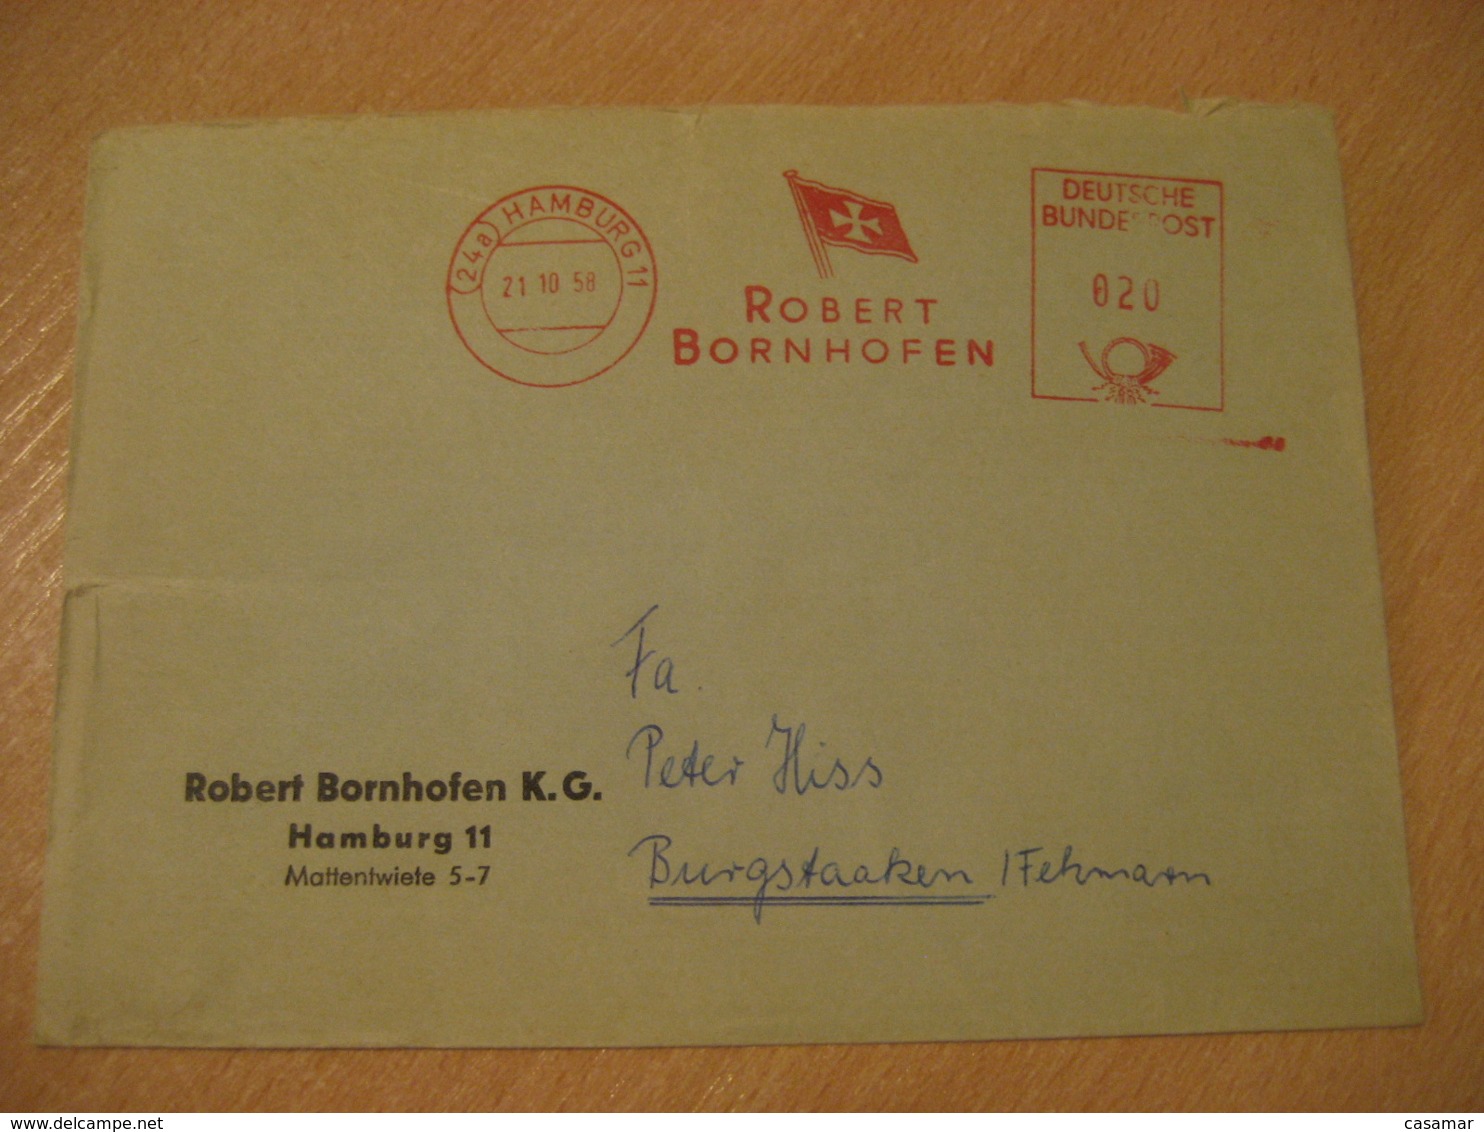 HAMBURG 1958 Robert Bornhofen Flag Flags Meter Mail Cancel Cover GERMANY - Sobres